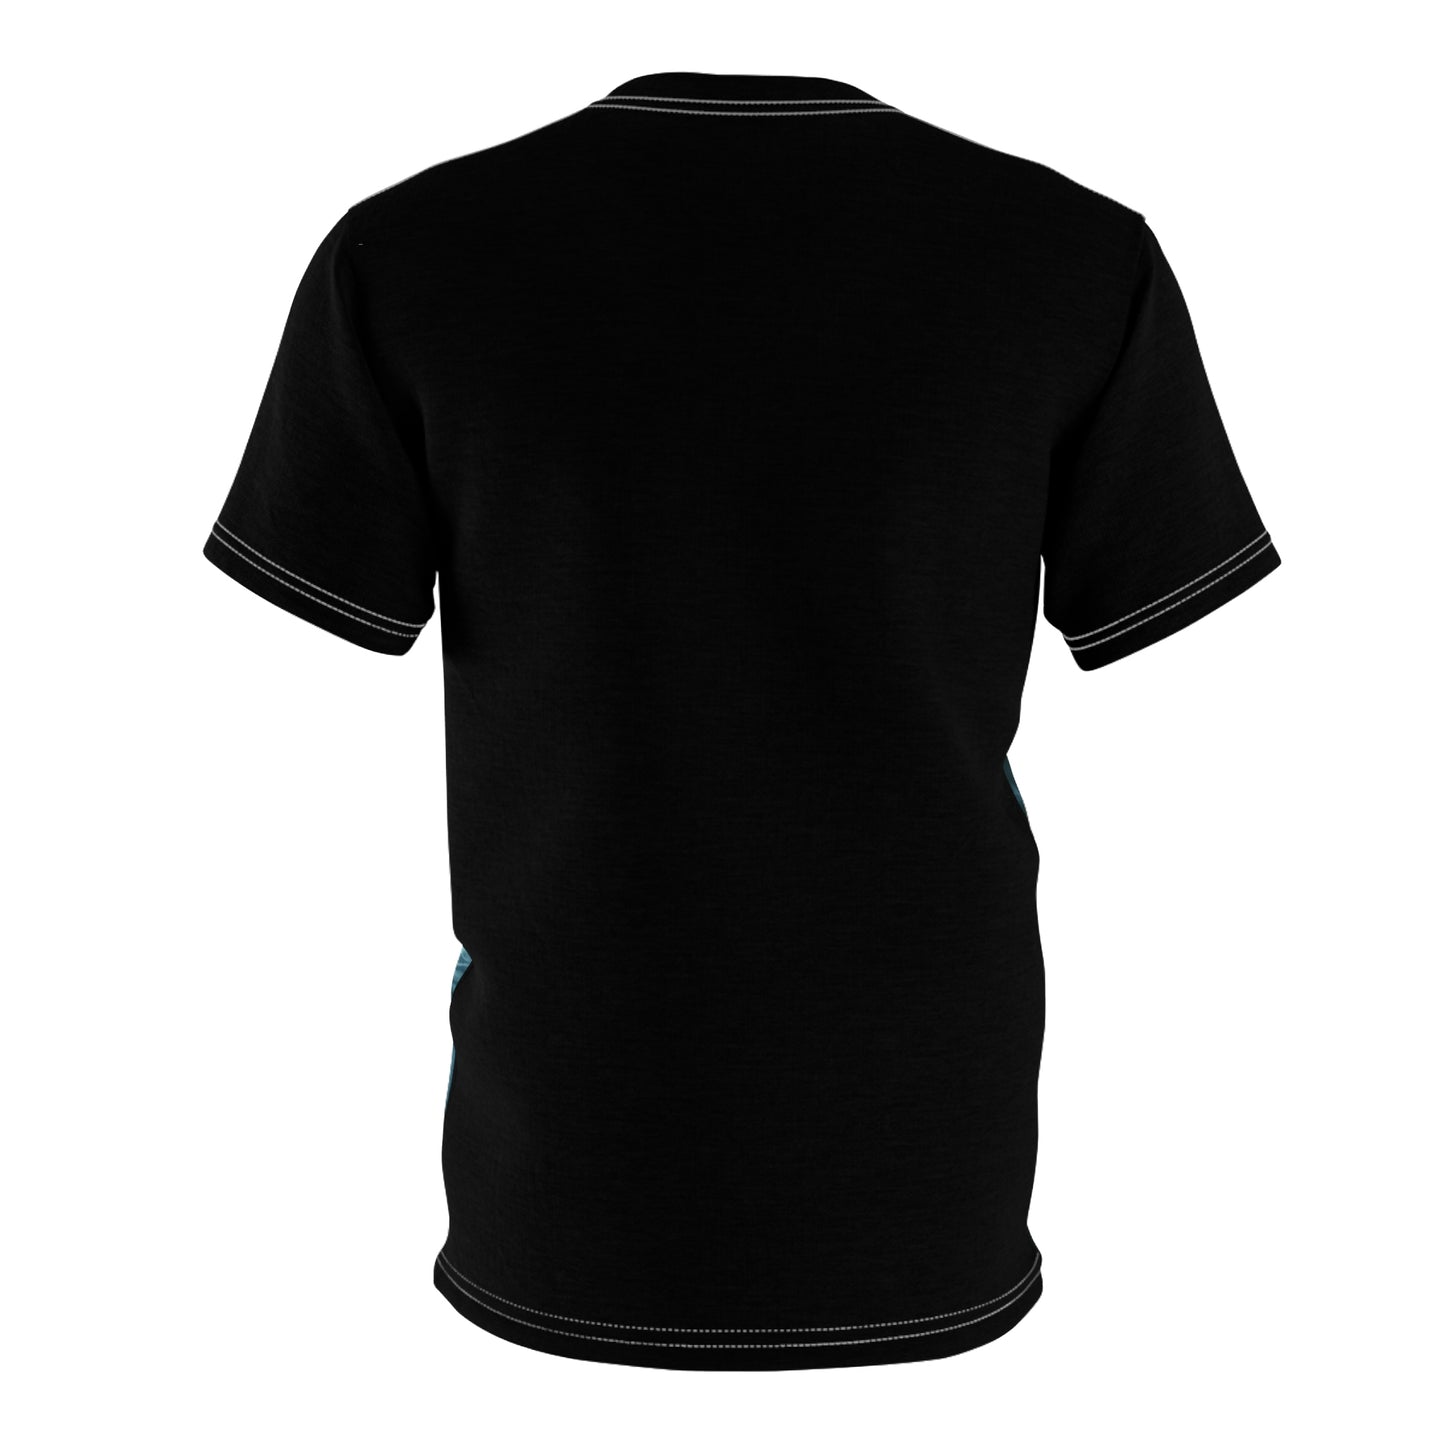 Rebound - Unisex All-Over Print Cut & Sew T-Shirt